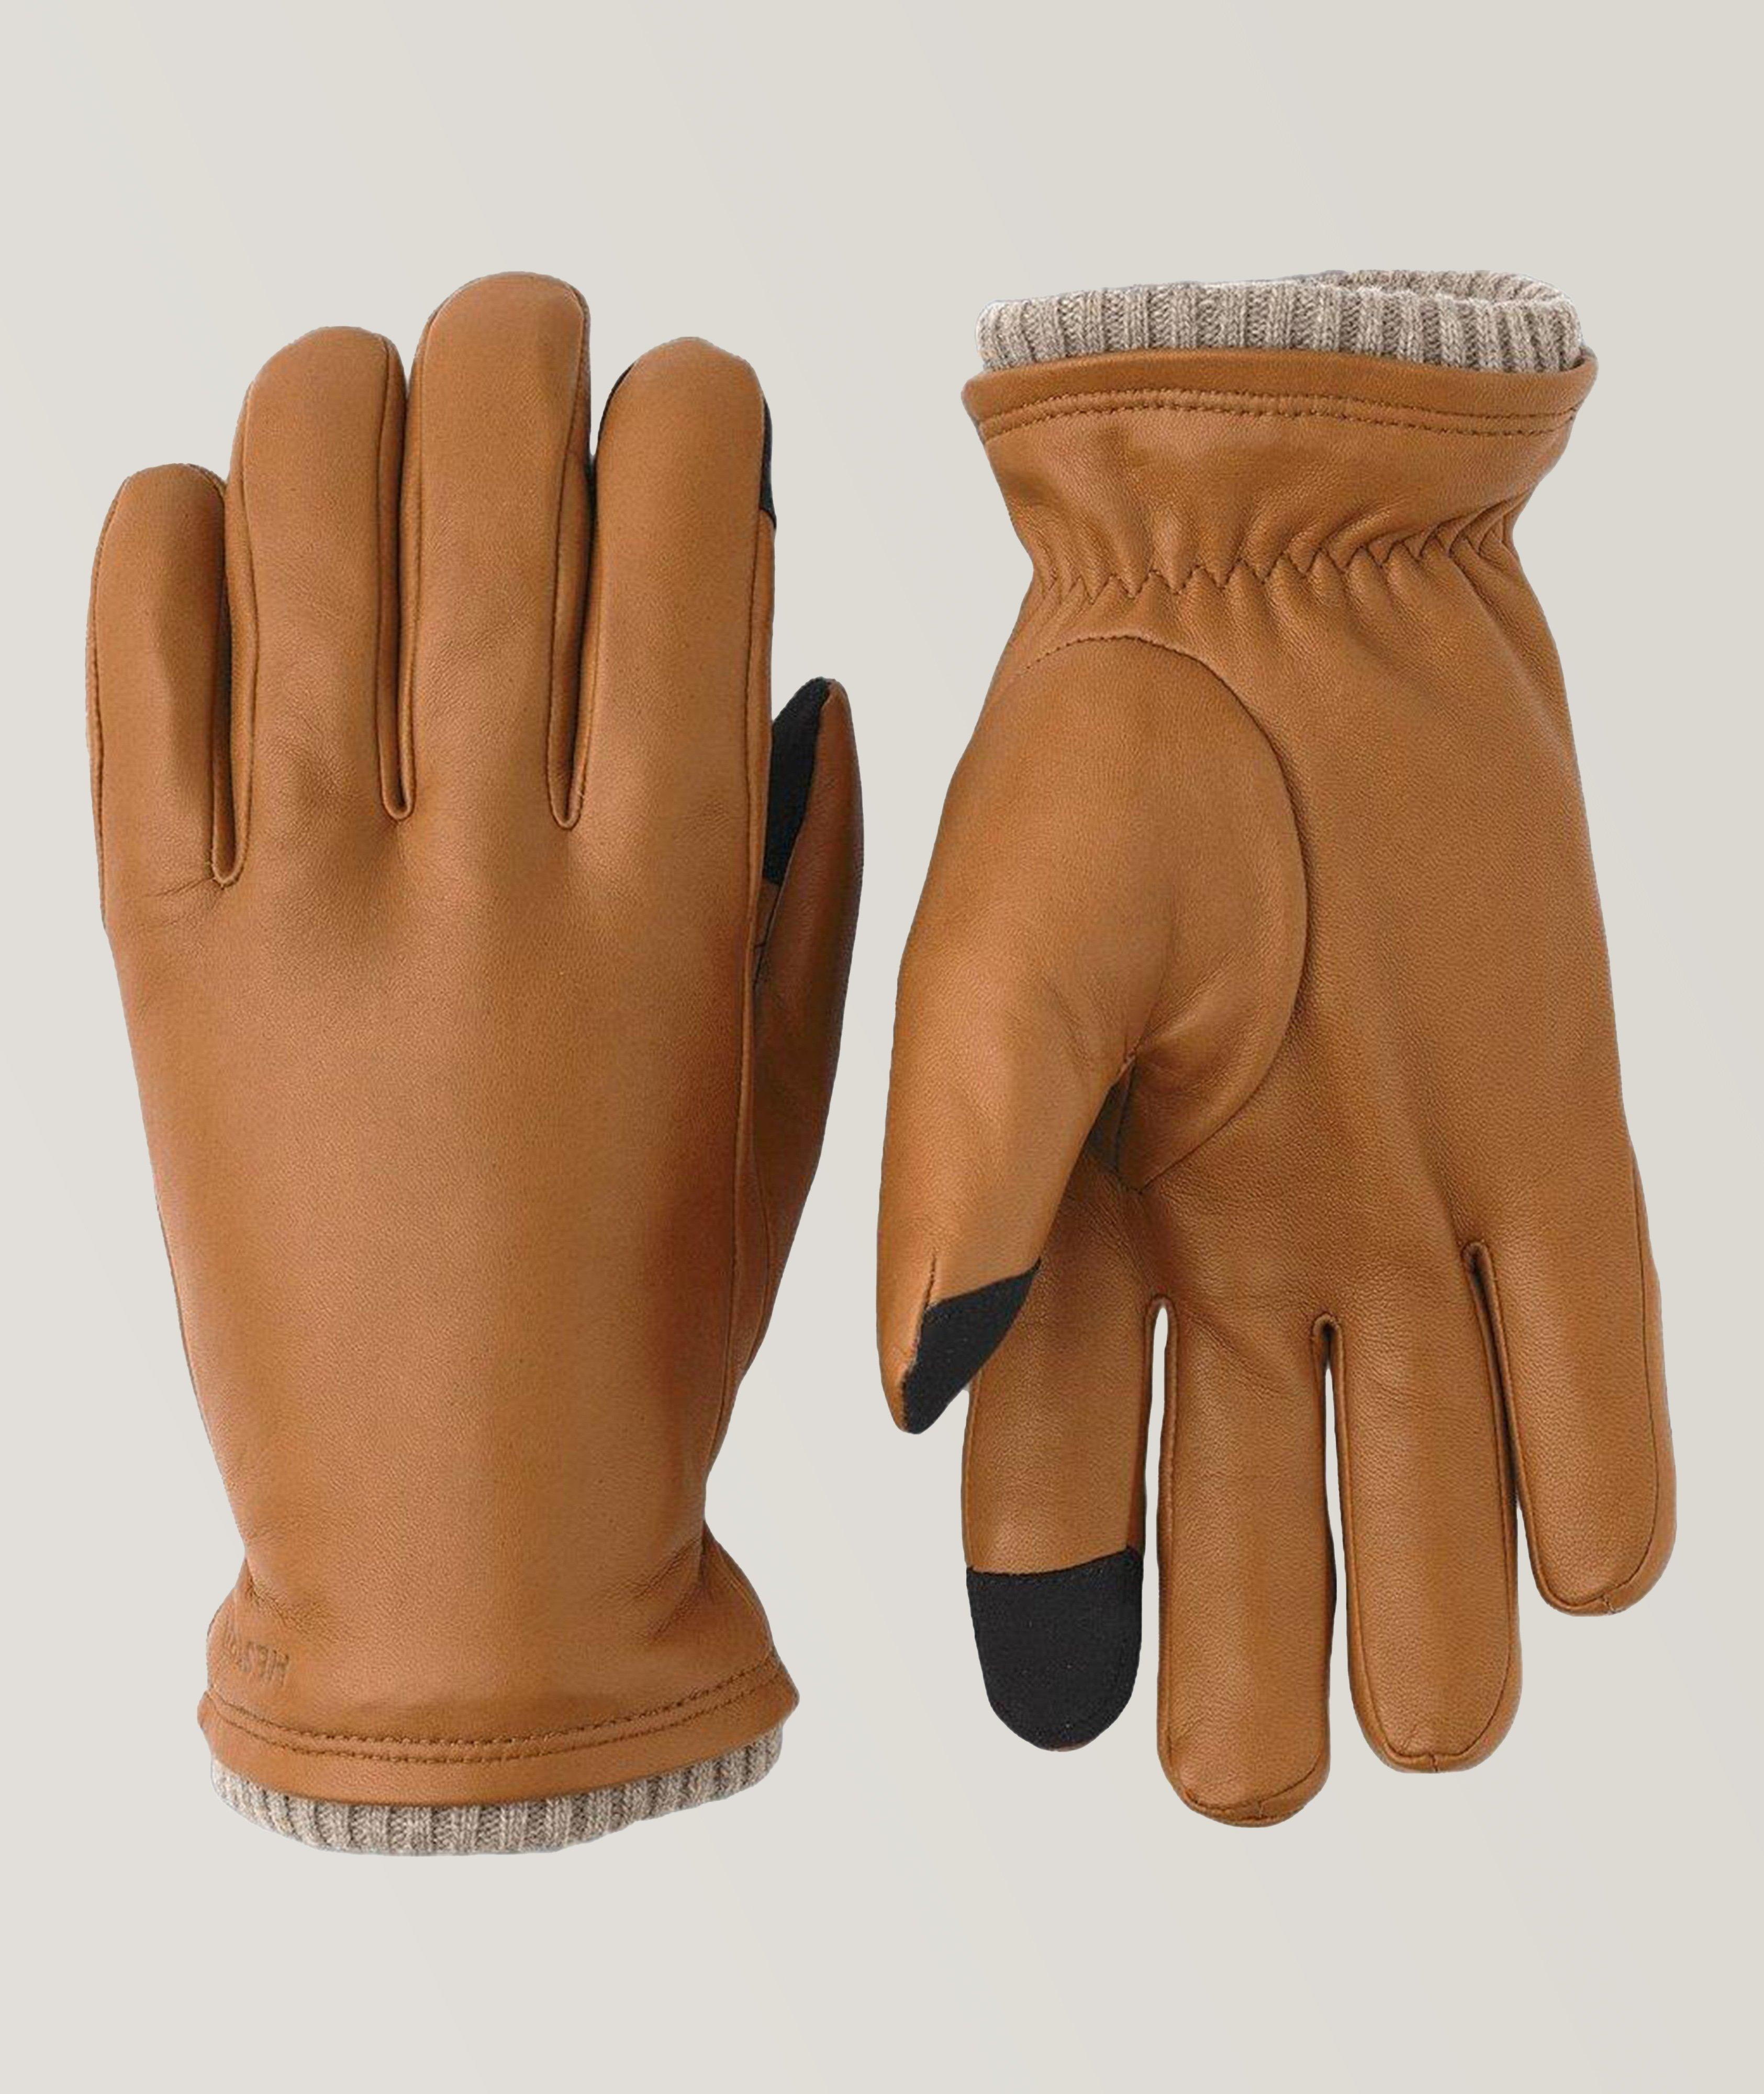 John Touchscreen-Compatible Hairsheep Gloves image 0